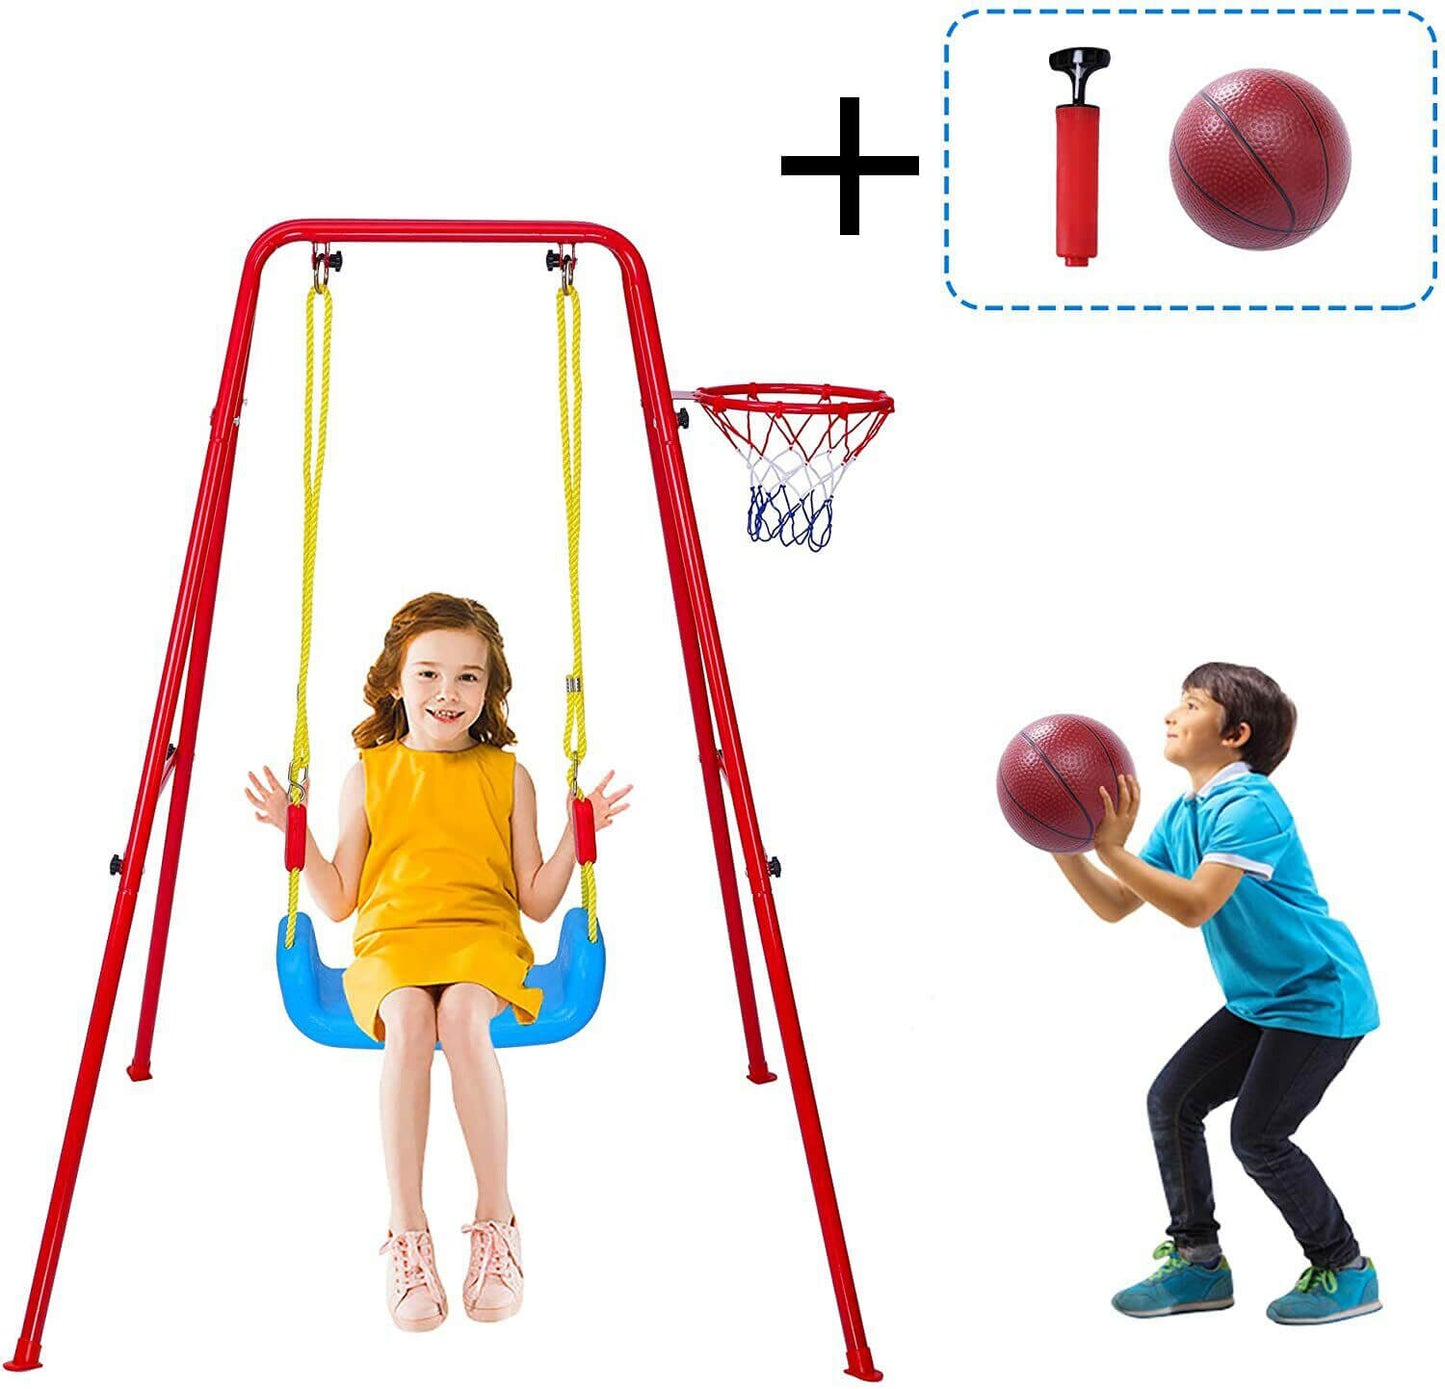 Swing Set For Kids + Free Basketball and Ball Pump